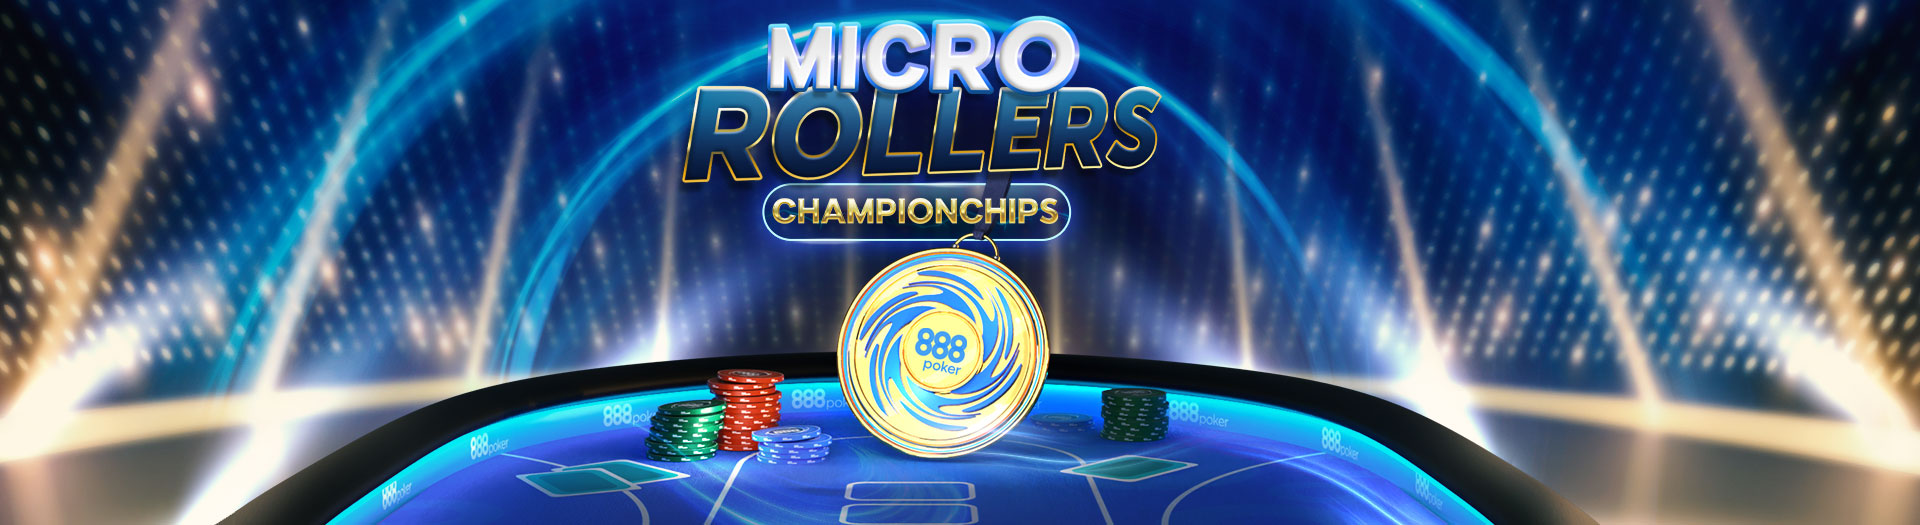 Micro Rollers ChampioChips